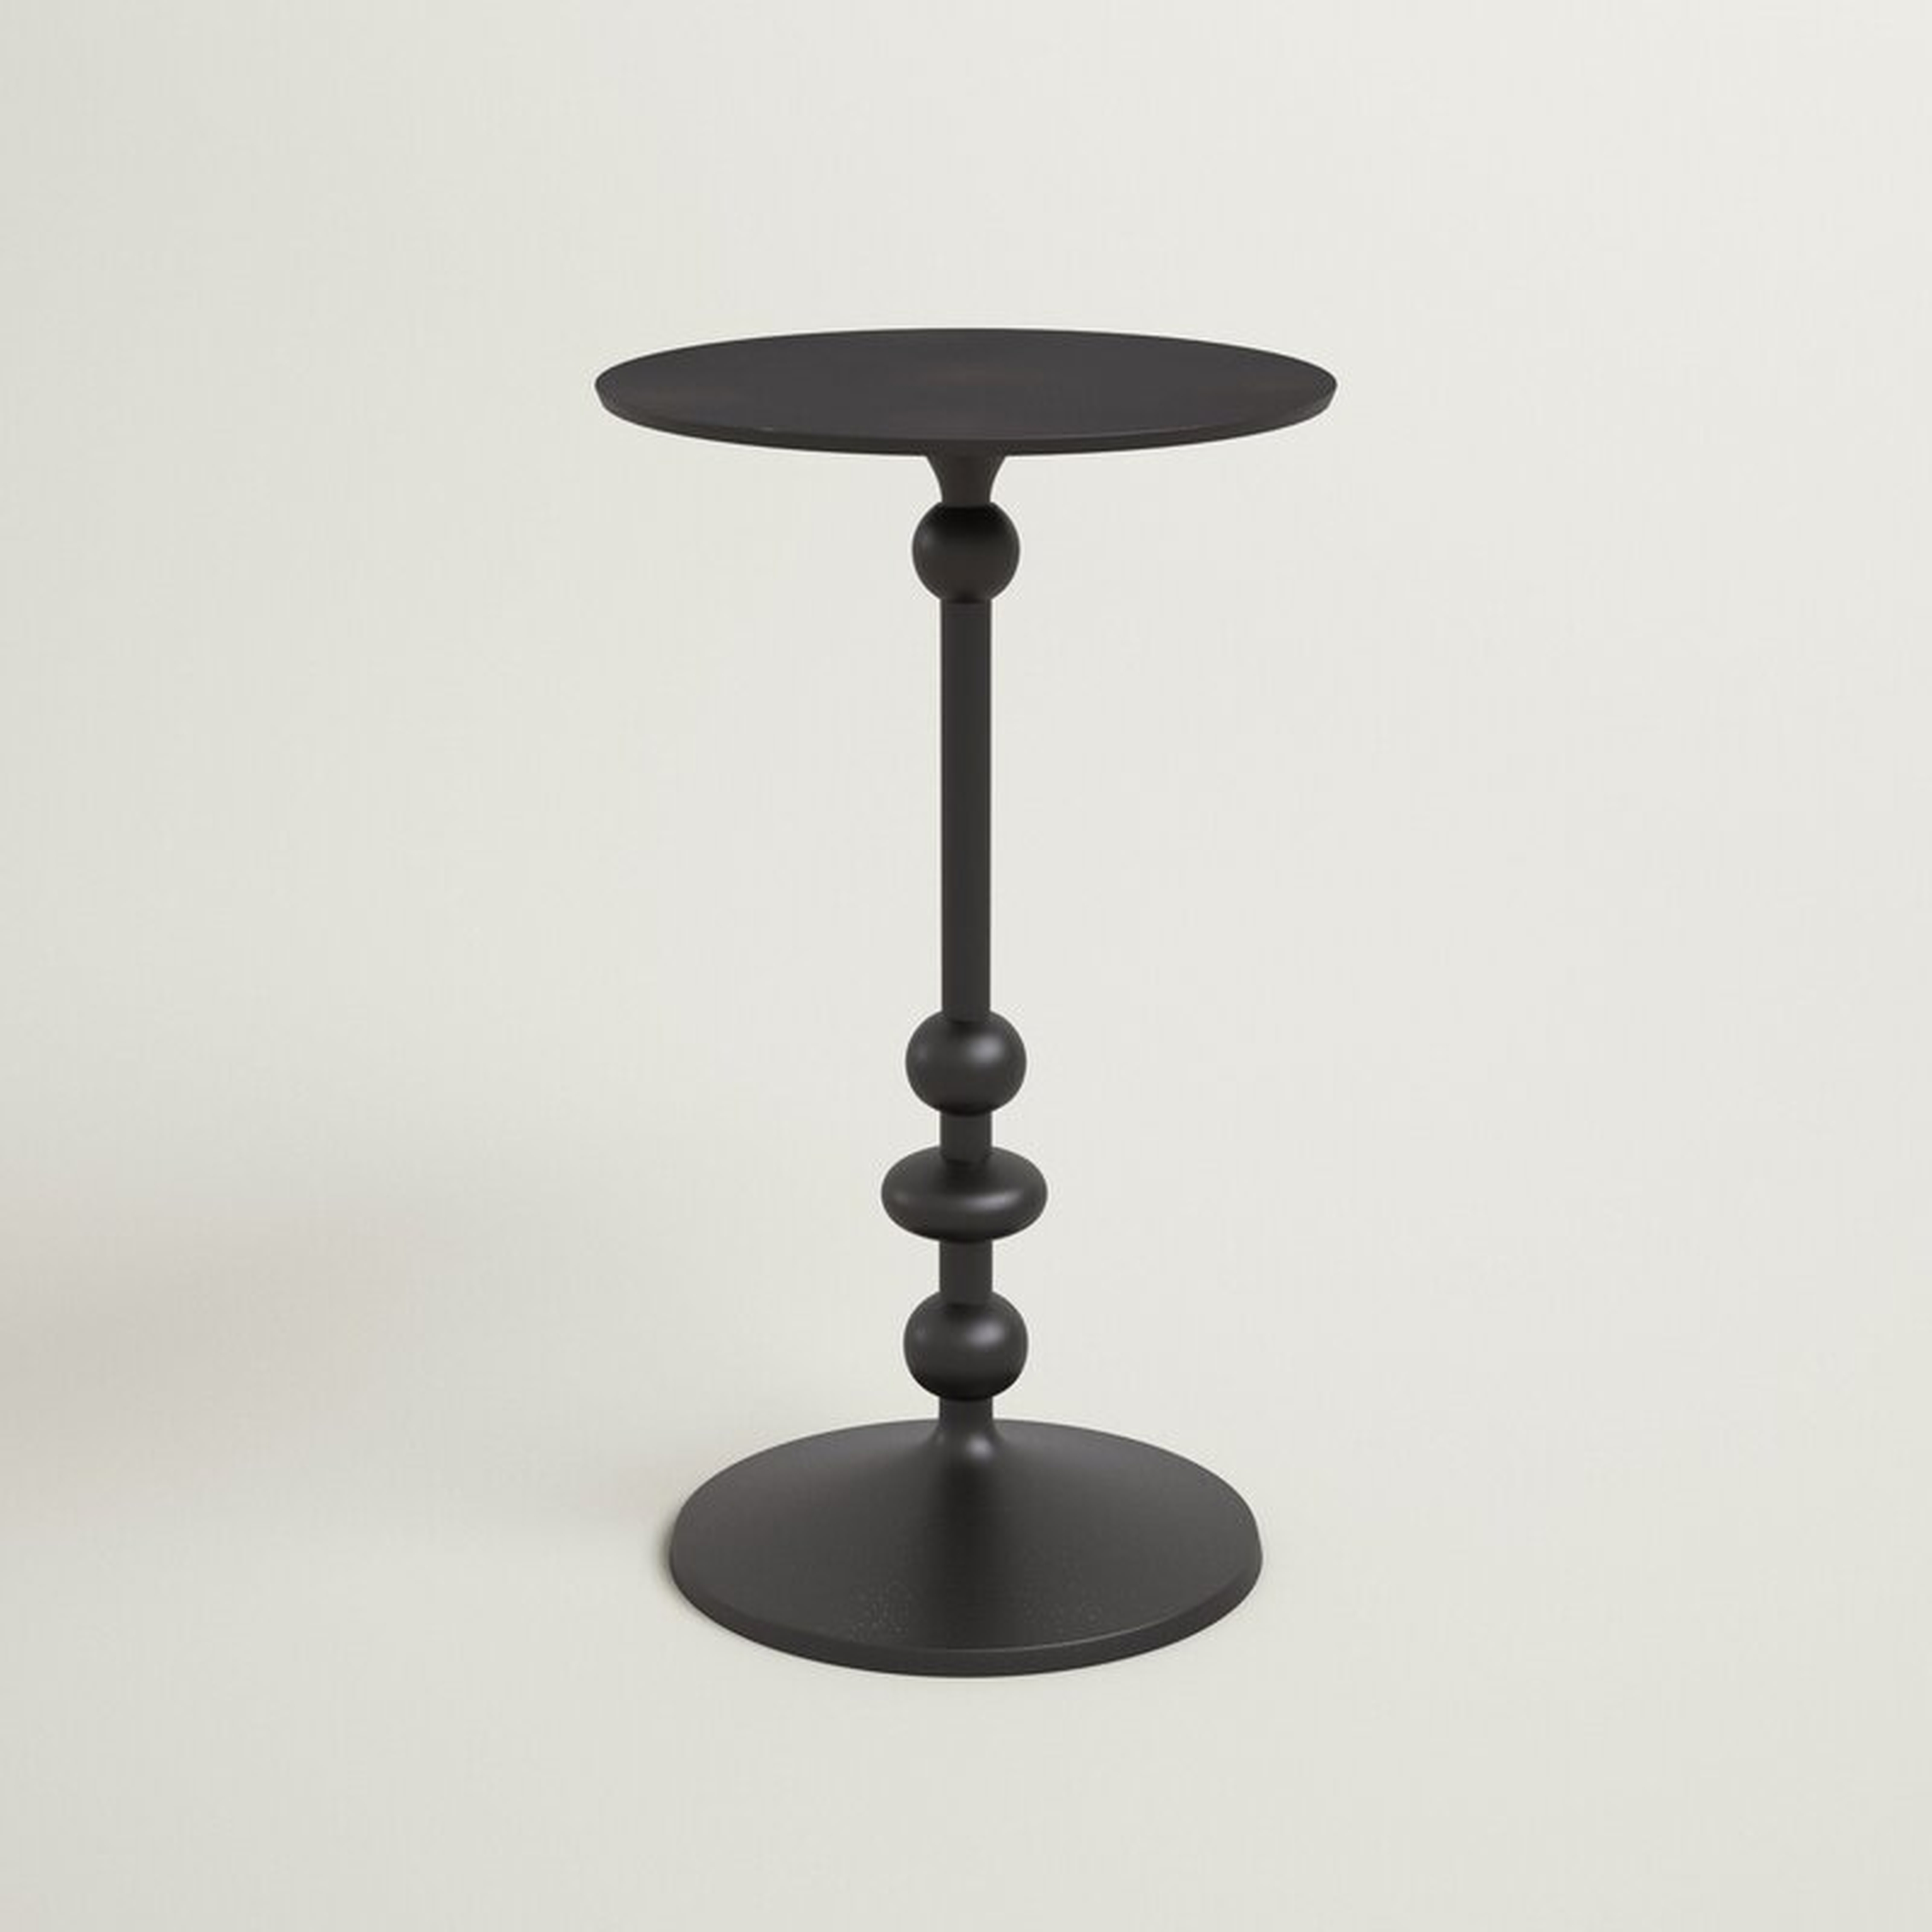 Derrell Iron Pedestal End Table, Black - Wayfair